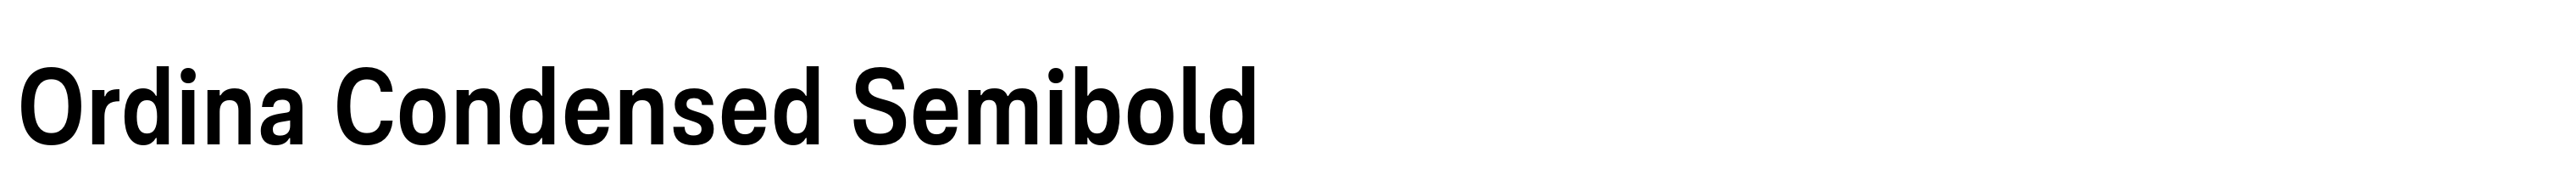 Ordina Condensed Semibold